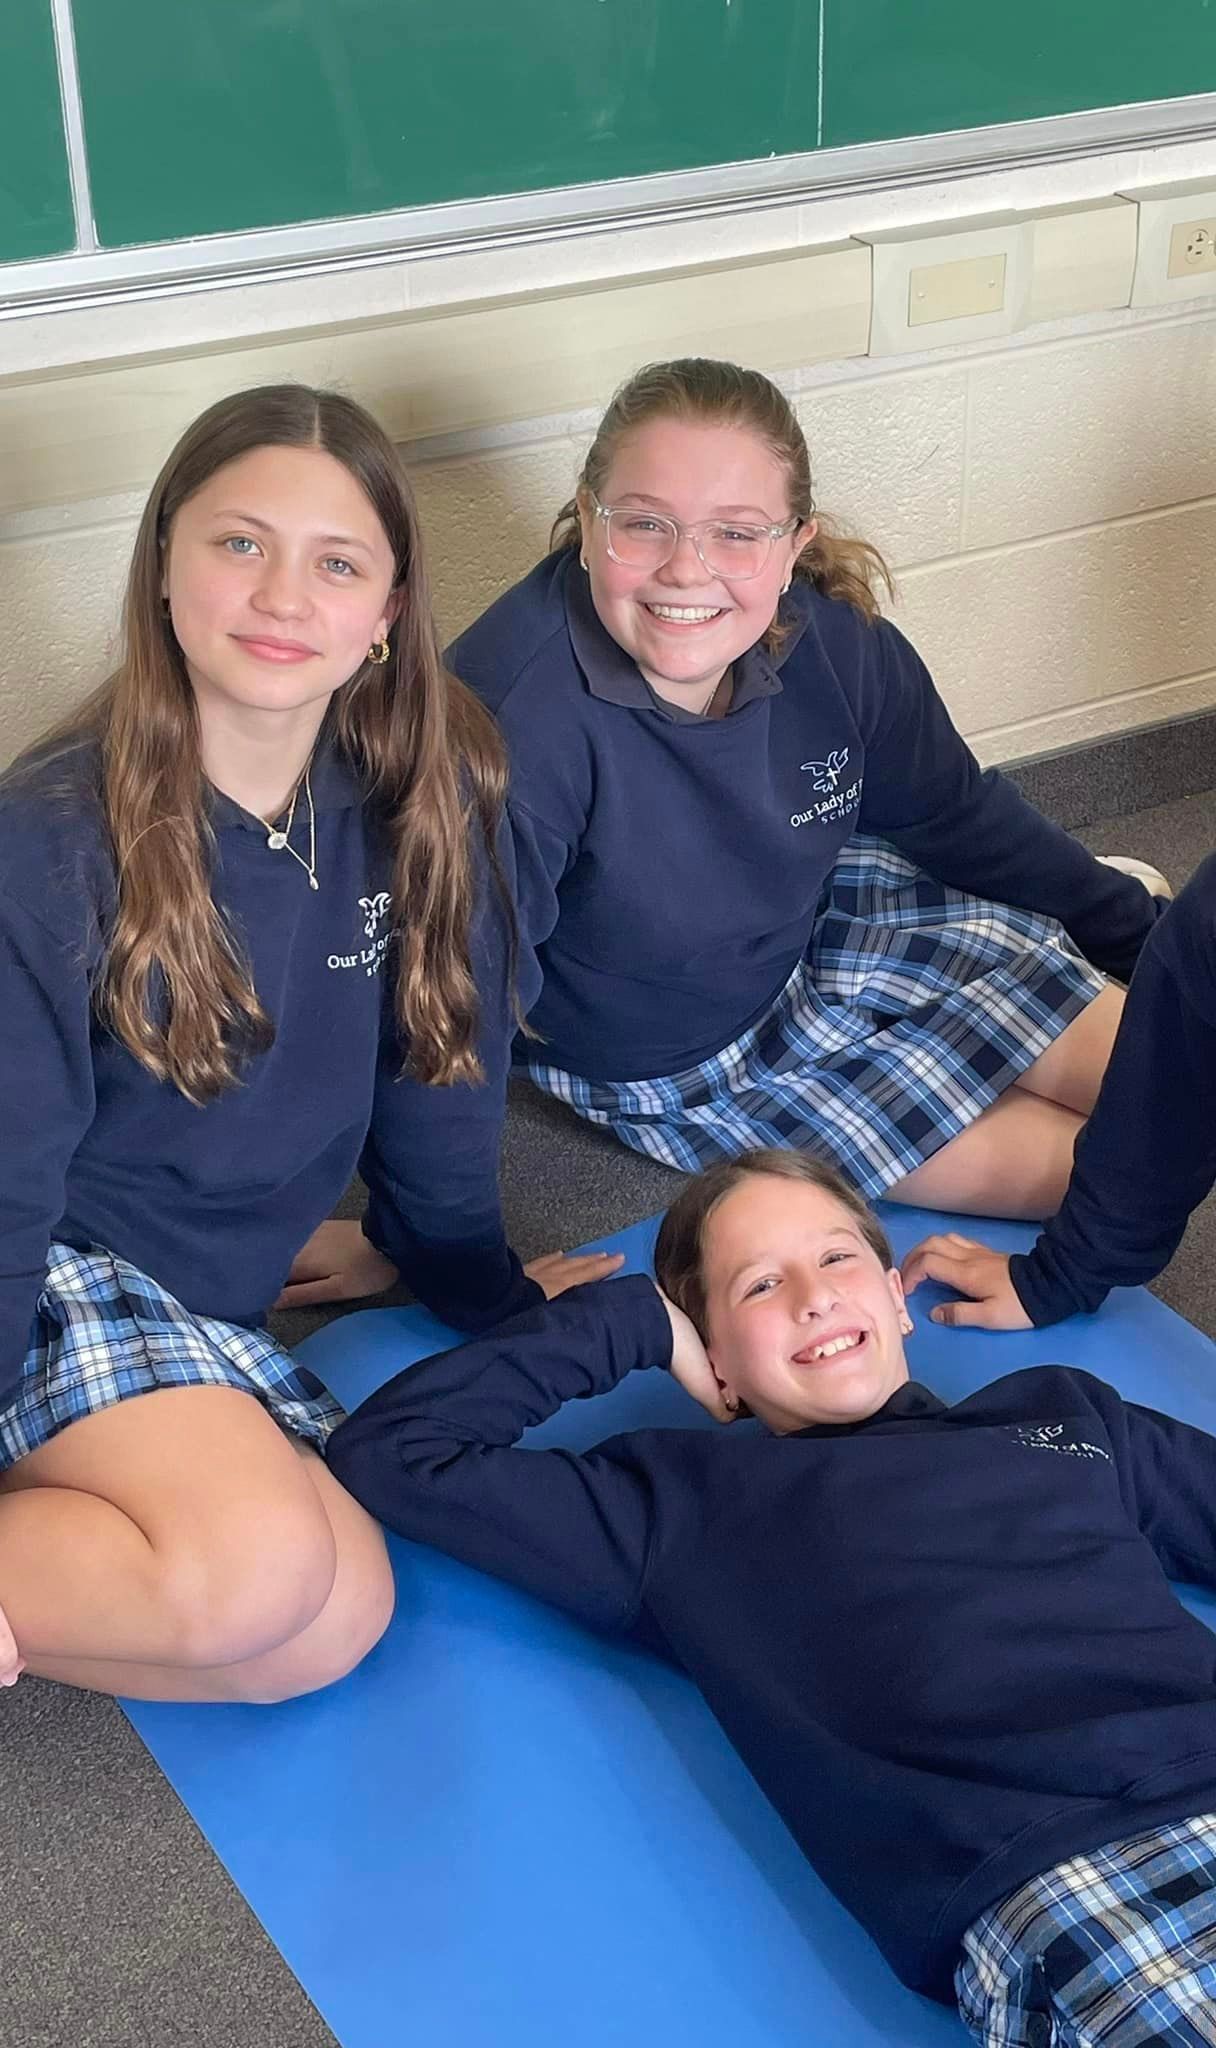 Three girls in school uniforms are sitting on a yoga mat